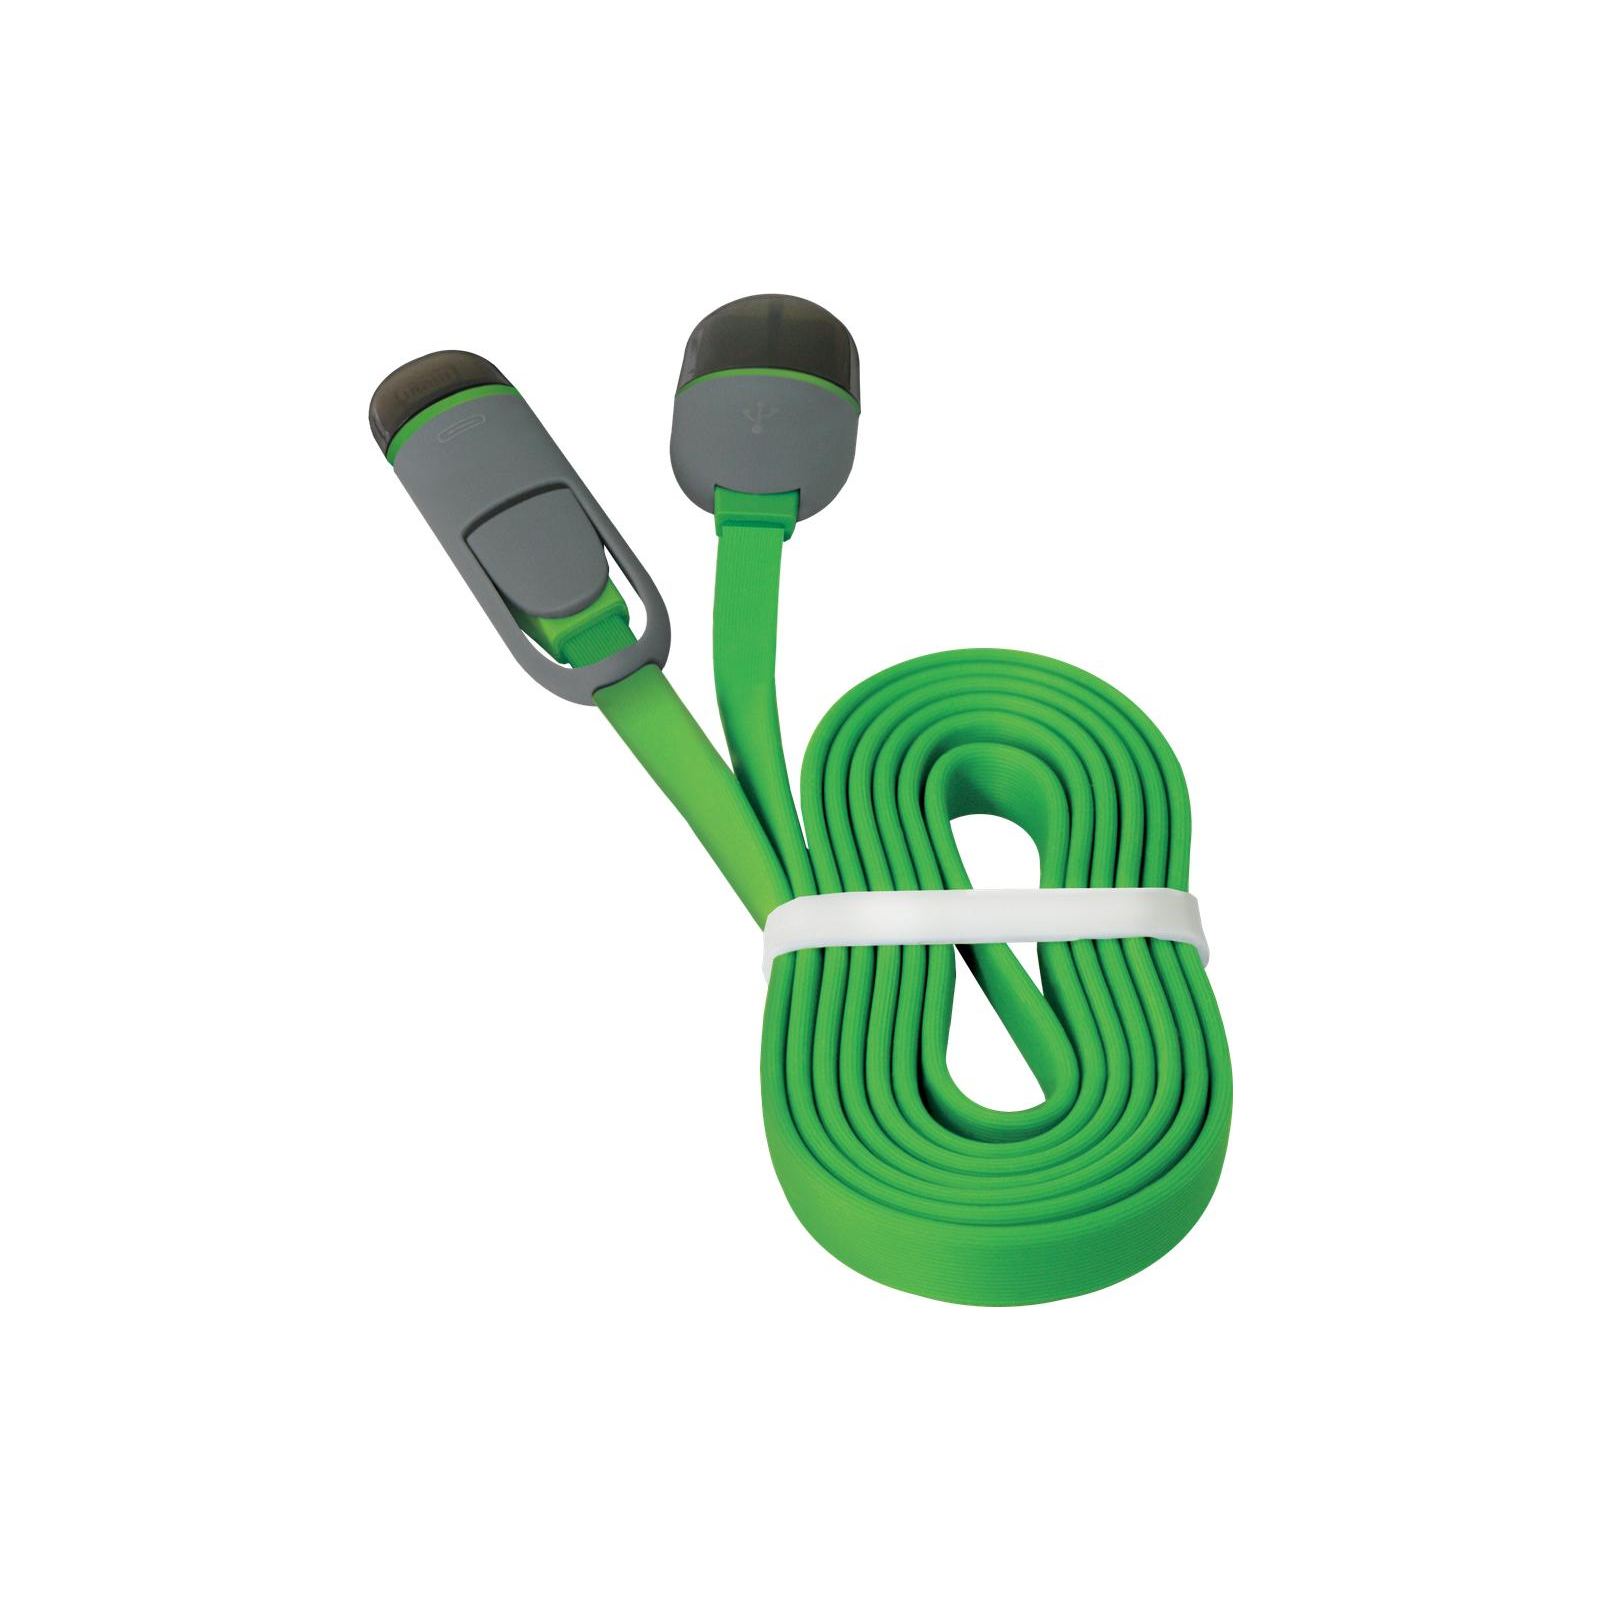 Дата кабель USB10-03BP USB - Micro USB/Lightning, white, 1m Defender (87493) зображення 3